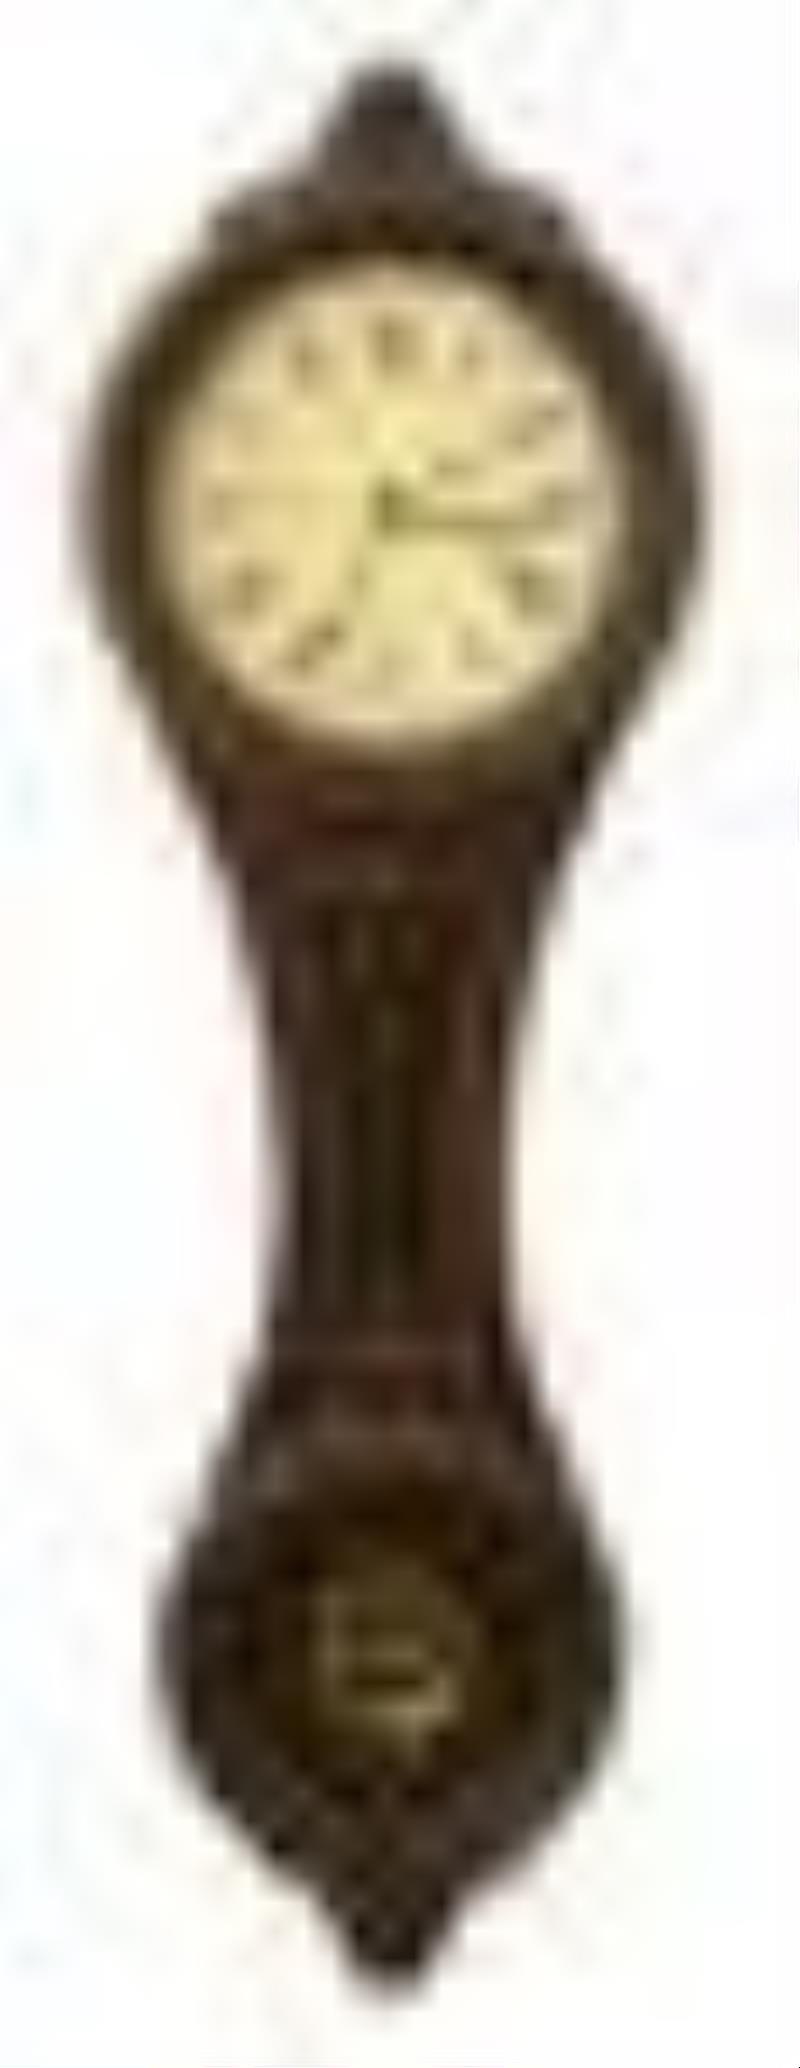 E. Howard & Co. "No. 9 Regulator" Figure Eight Wall Clock